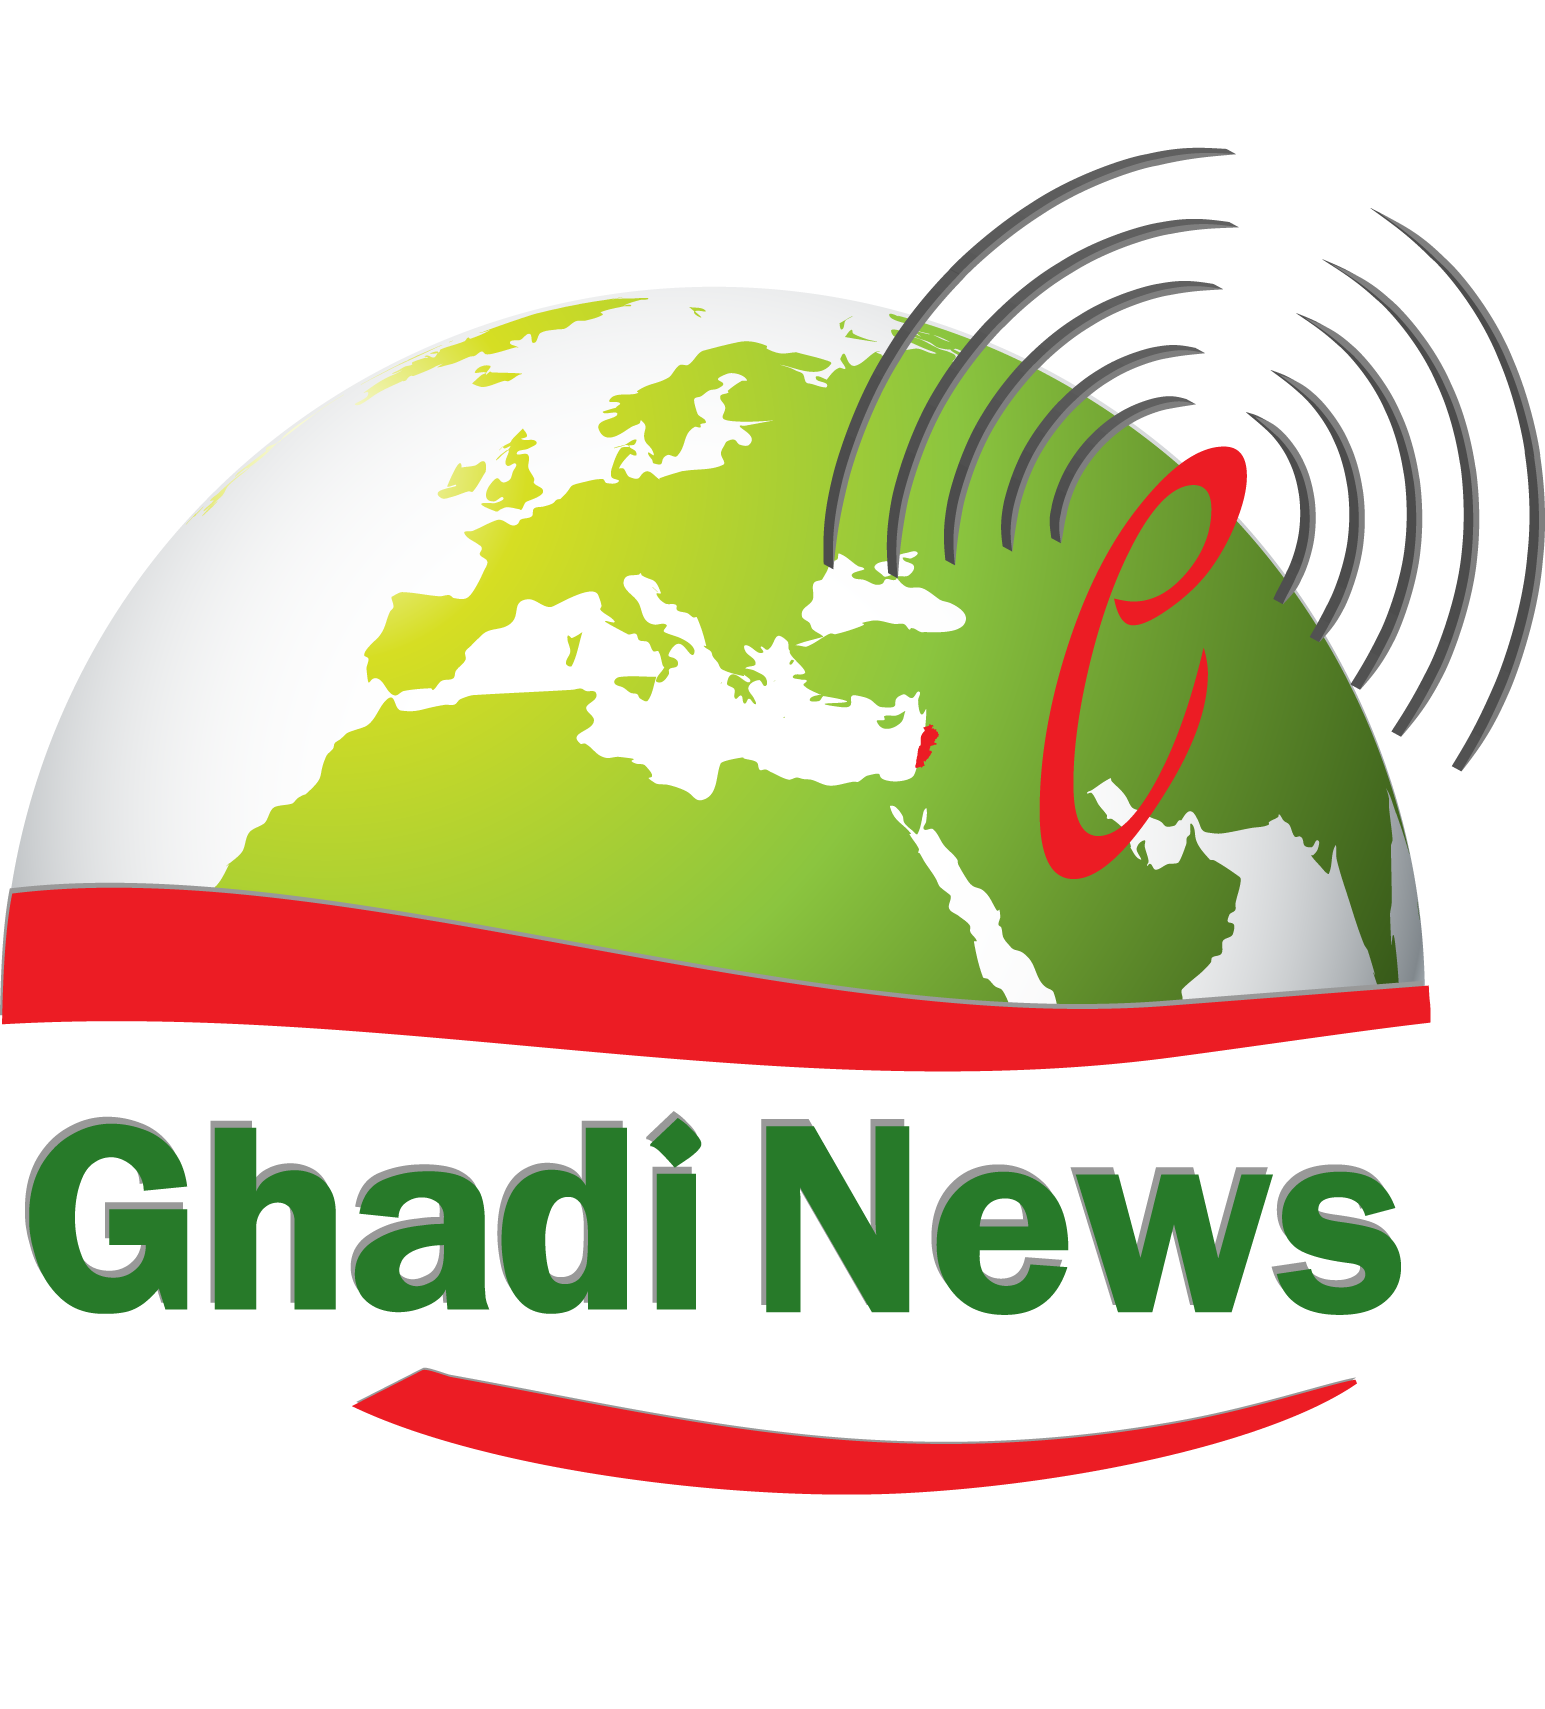 Ghadi news